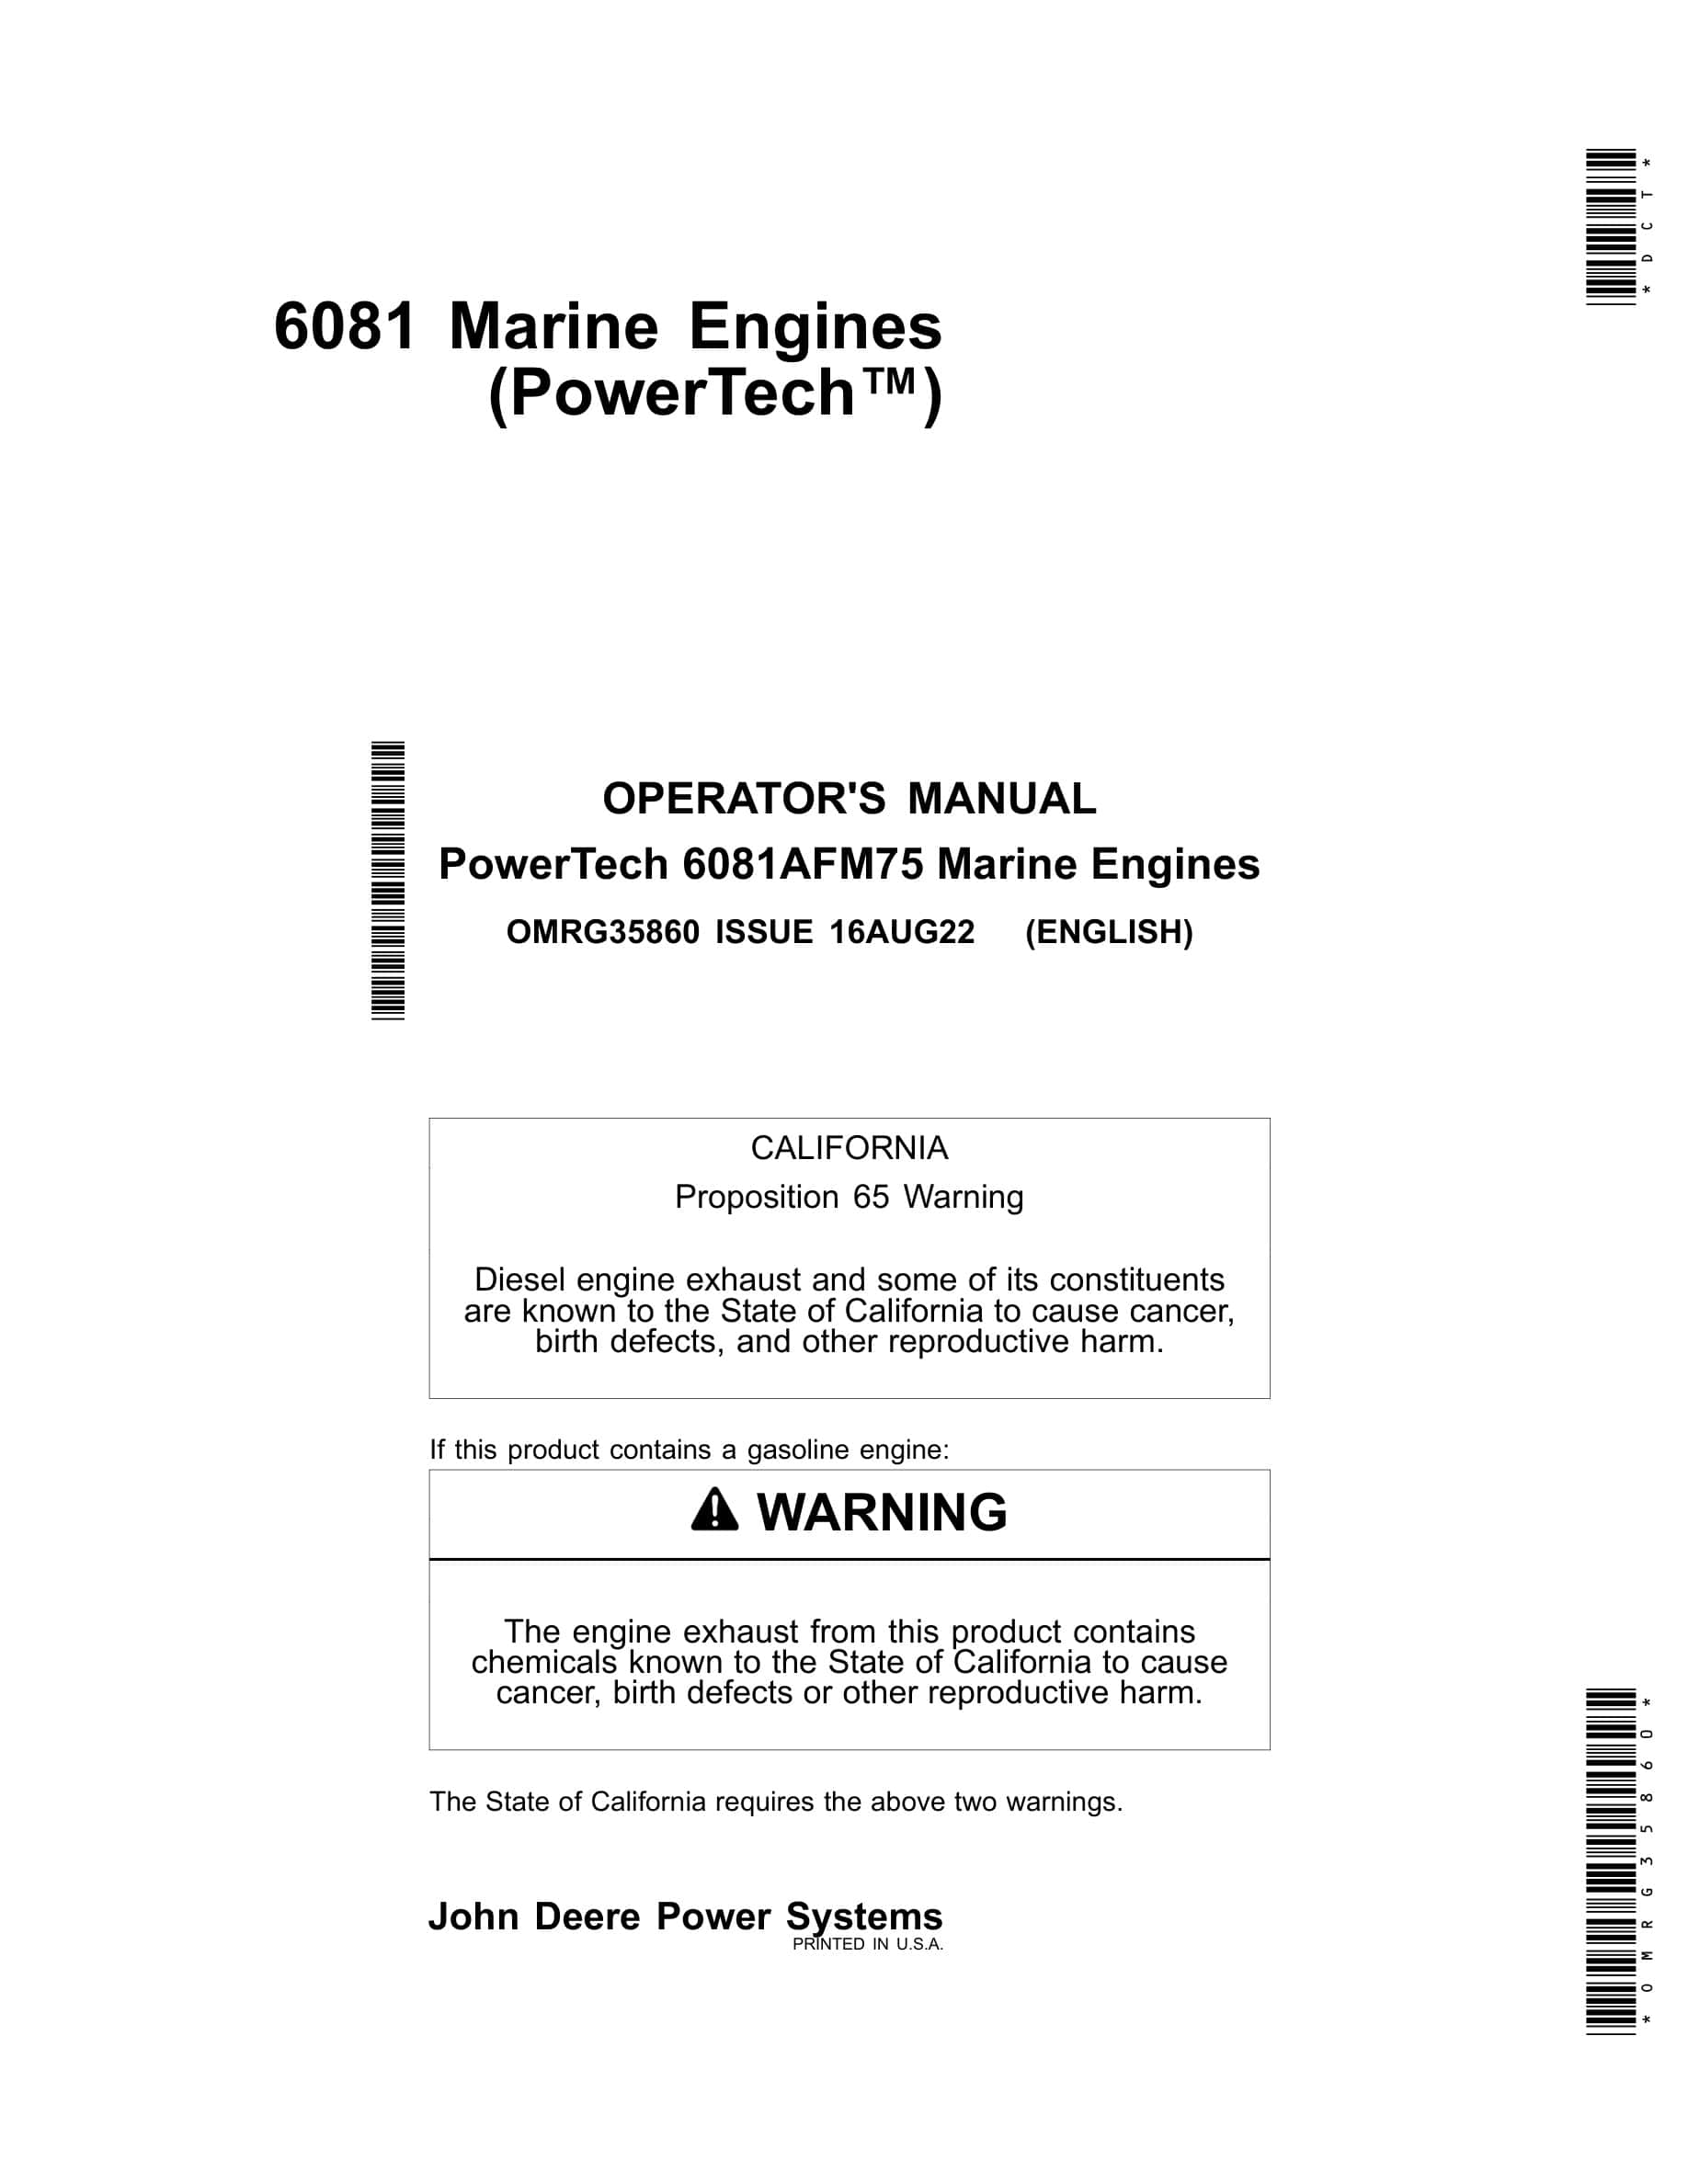 John Deere PowerTech 6081AFM75 Marine Engines Operator Manual OMRG35860-1